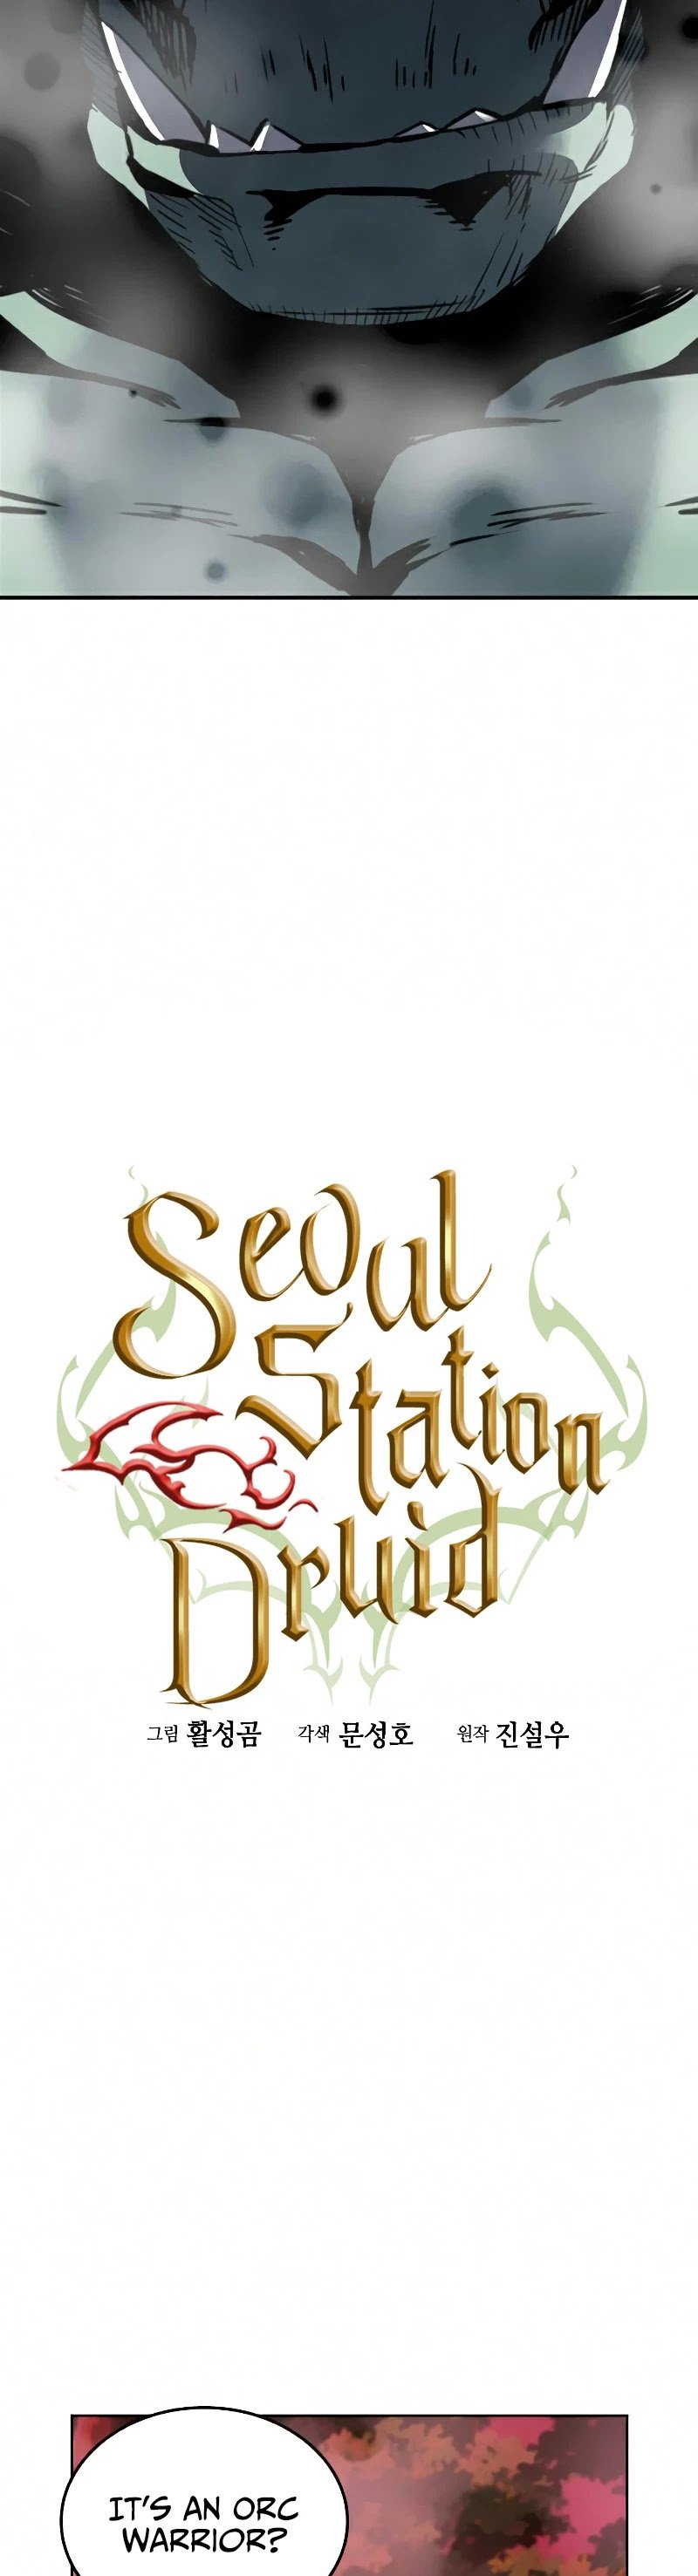 Seoul Station Druid chapter 25